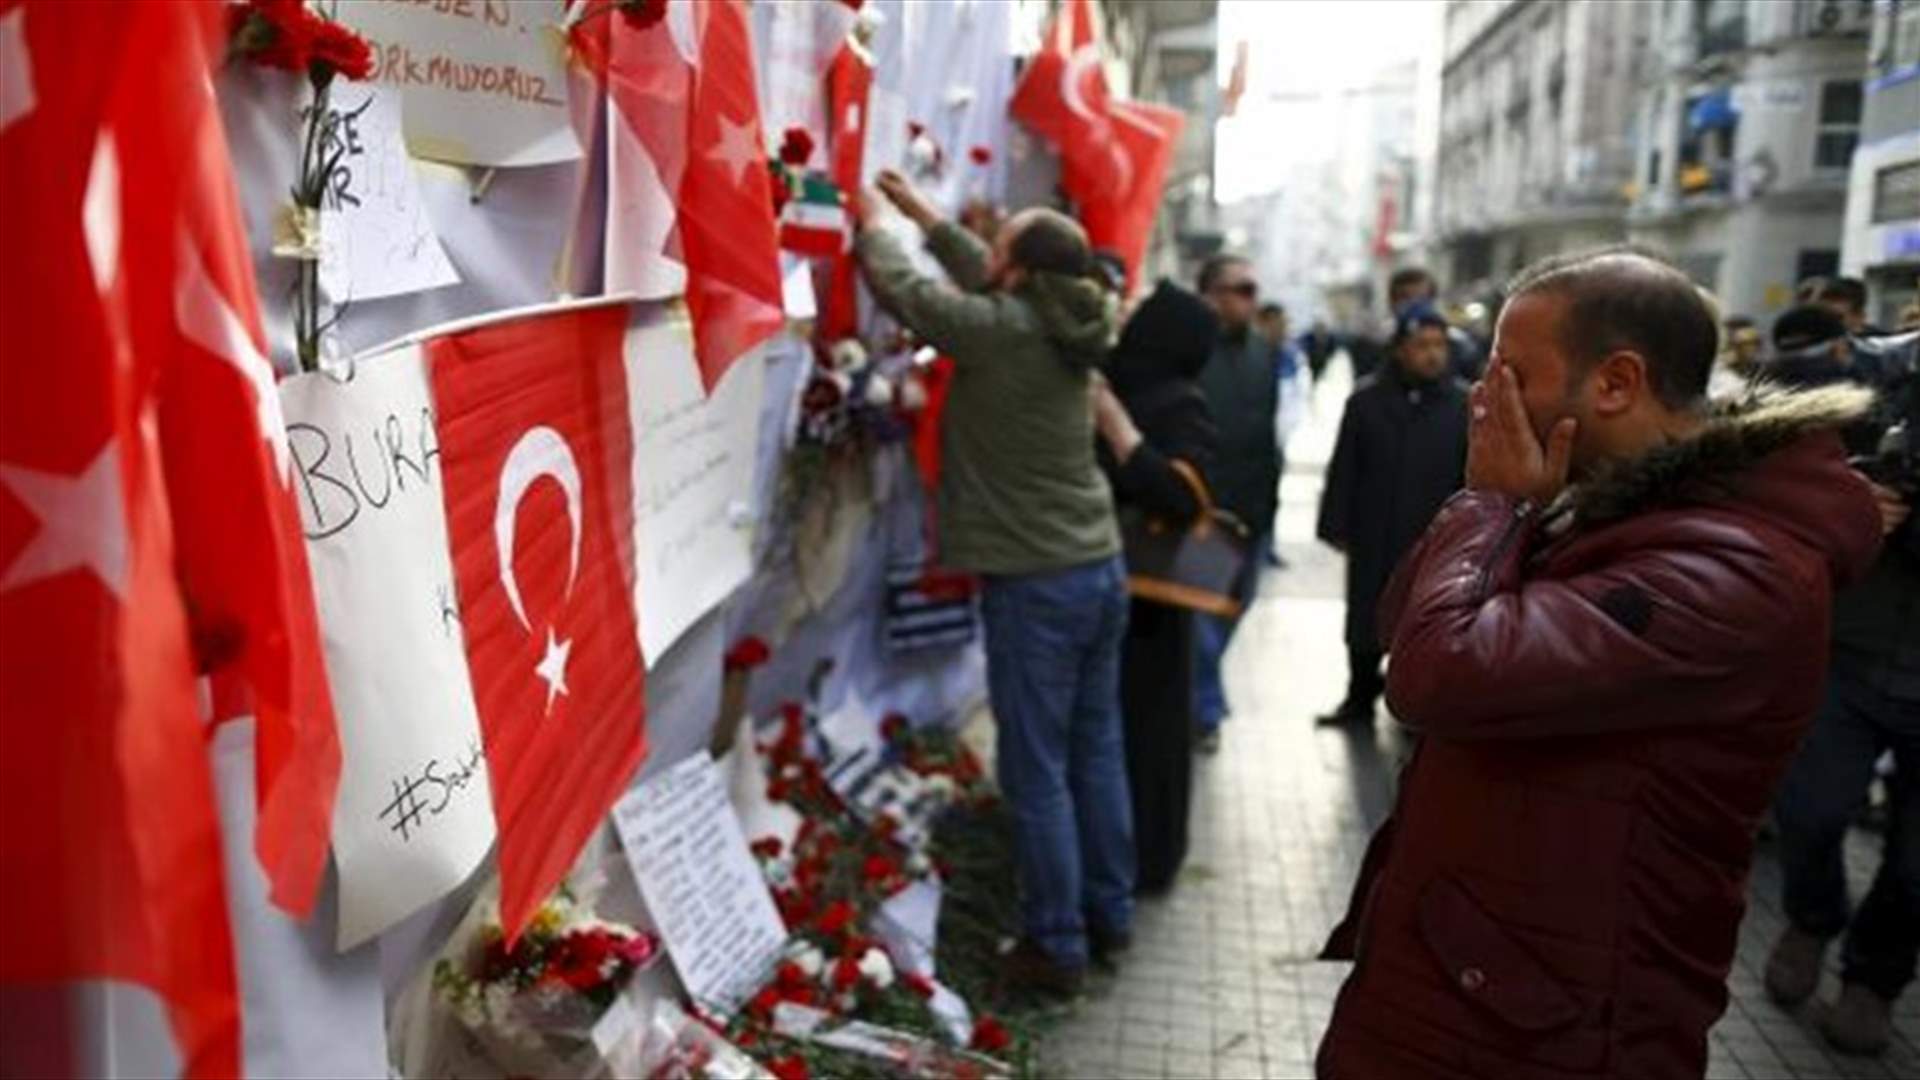 Turkish court orders arrest of suspect over Istanbul bombing - media